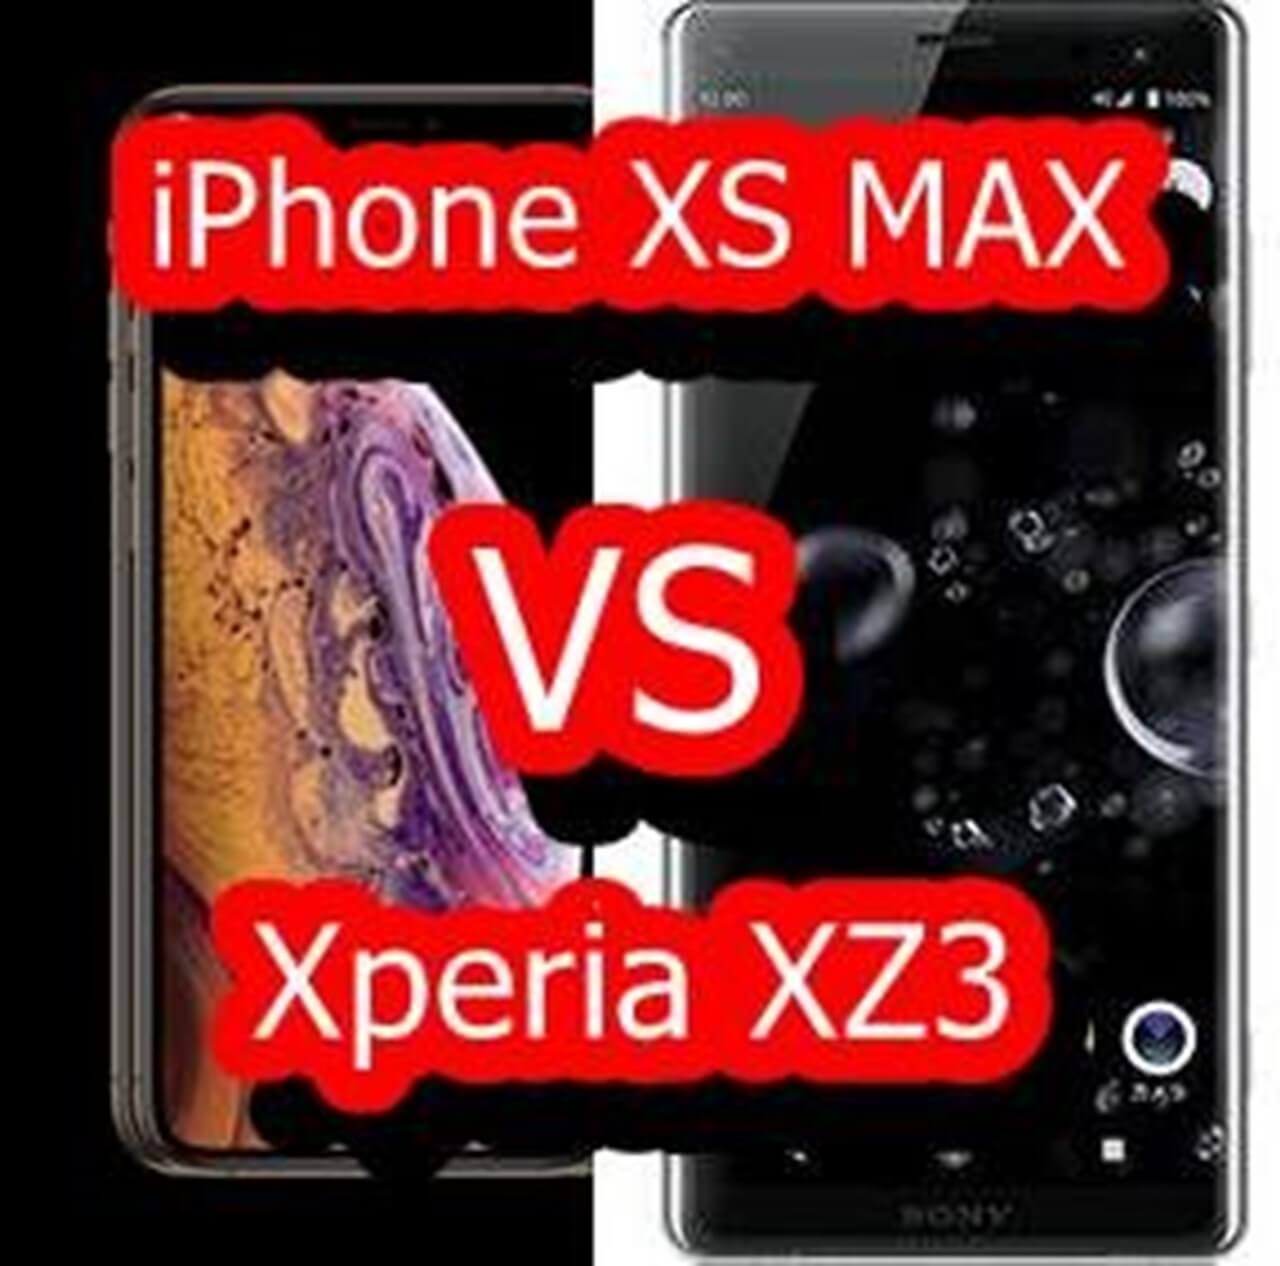 iPhone XSとXperia XZ3